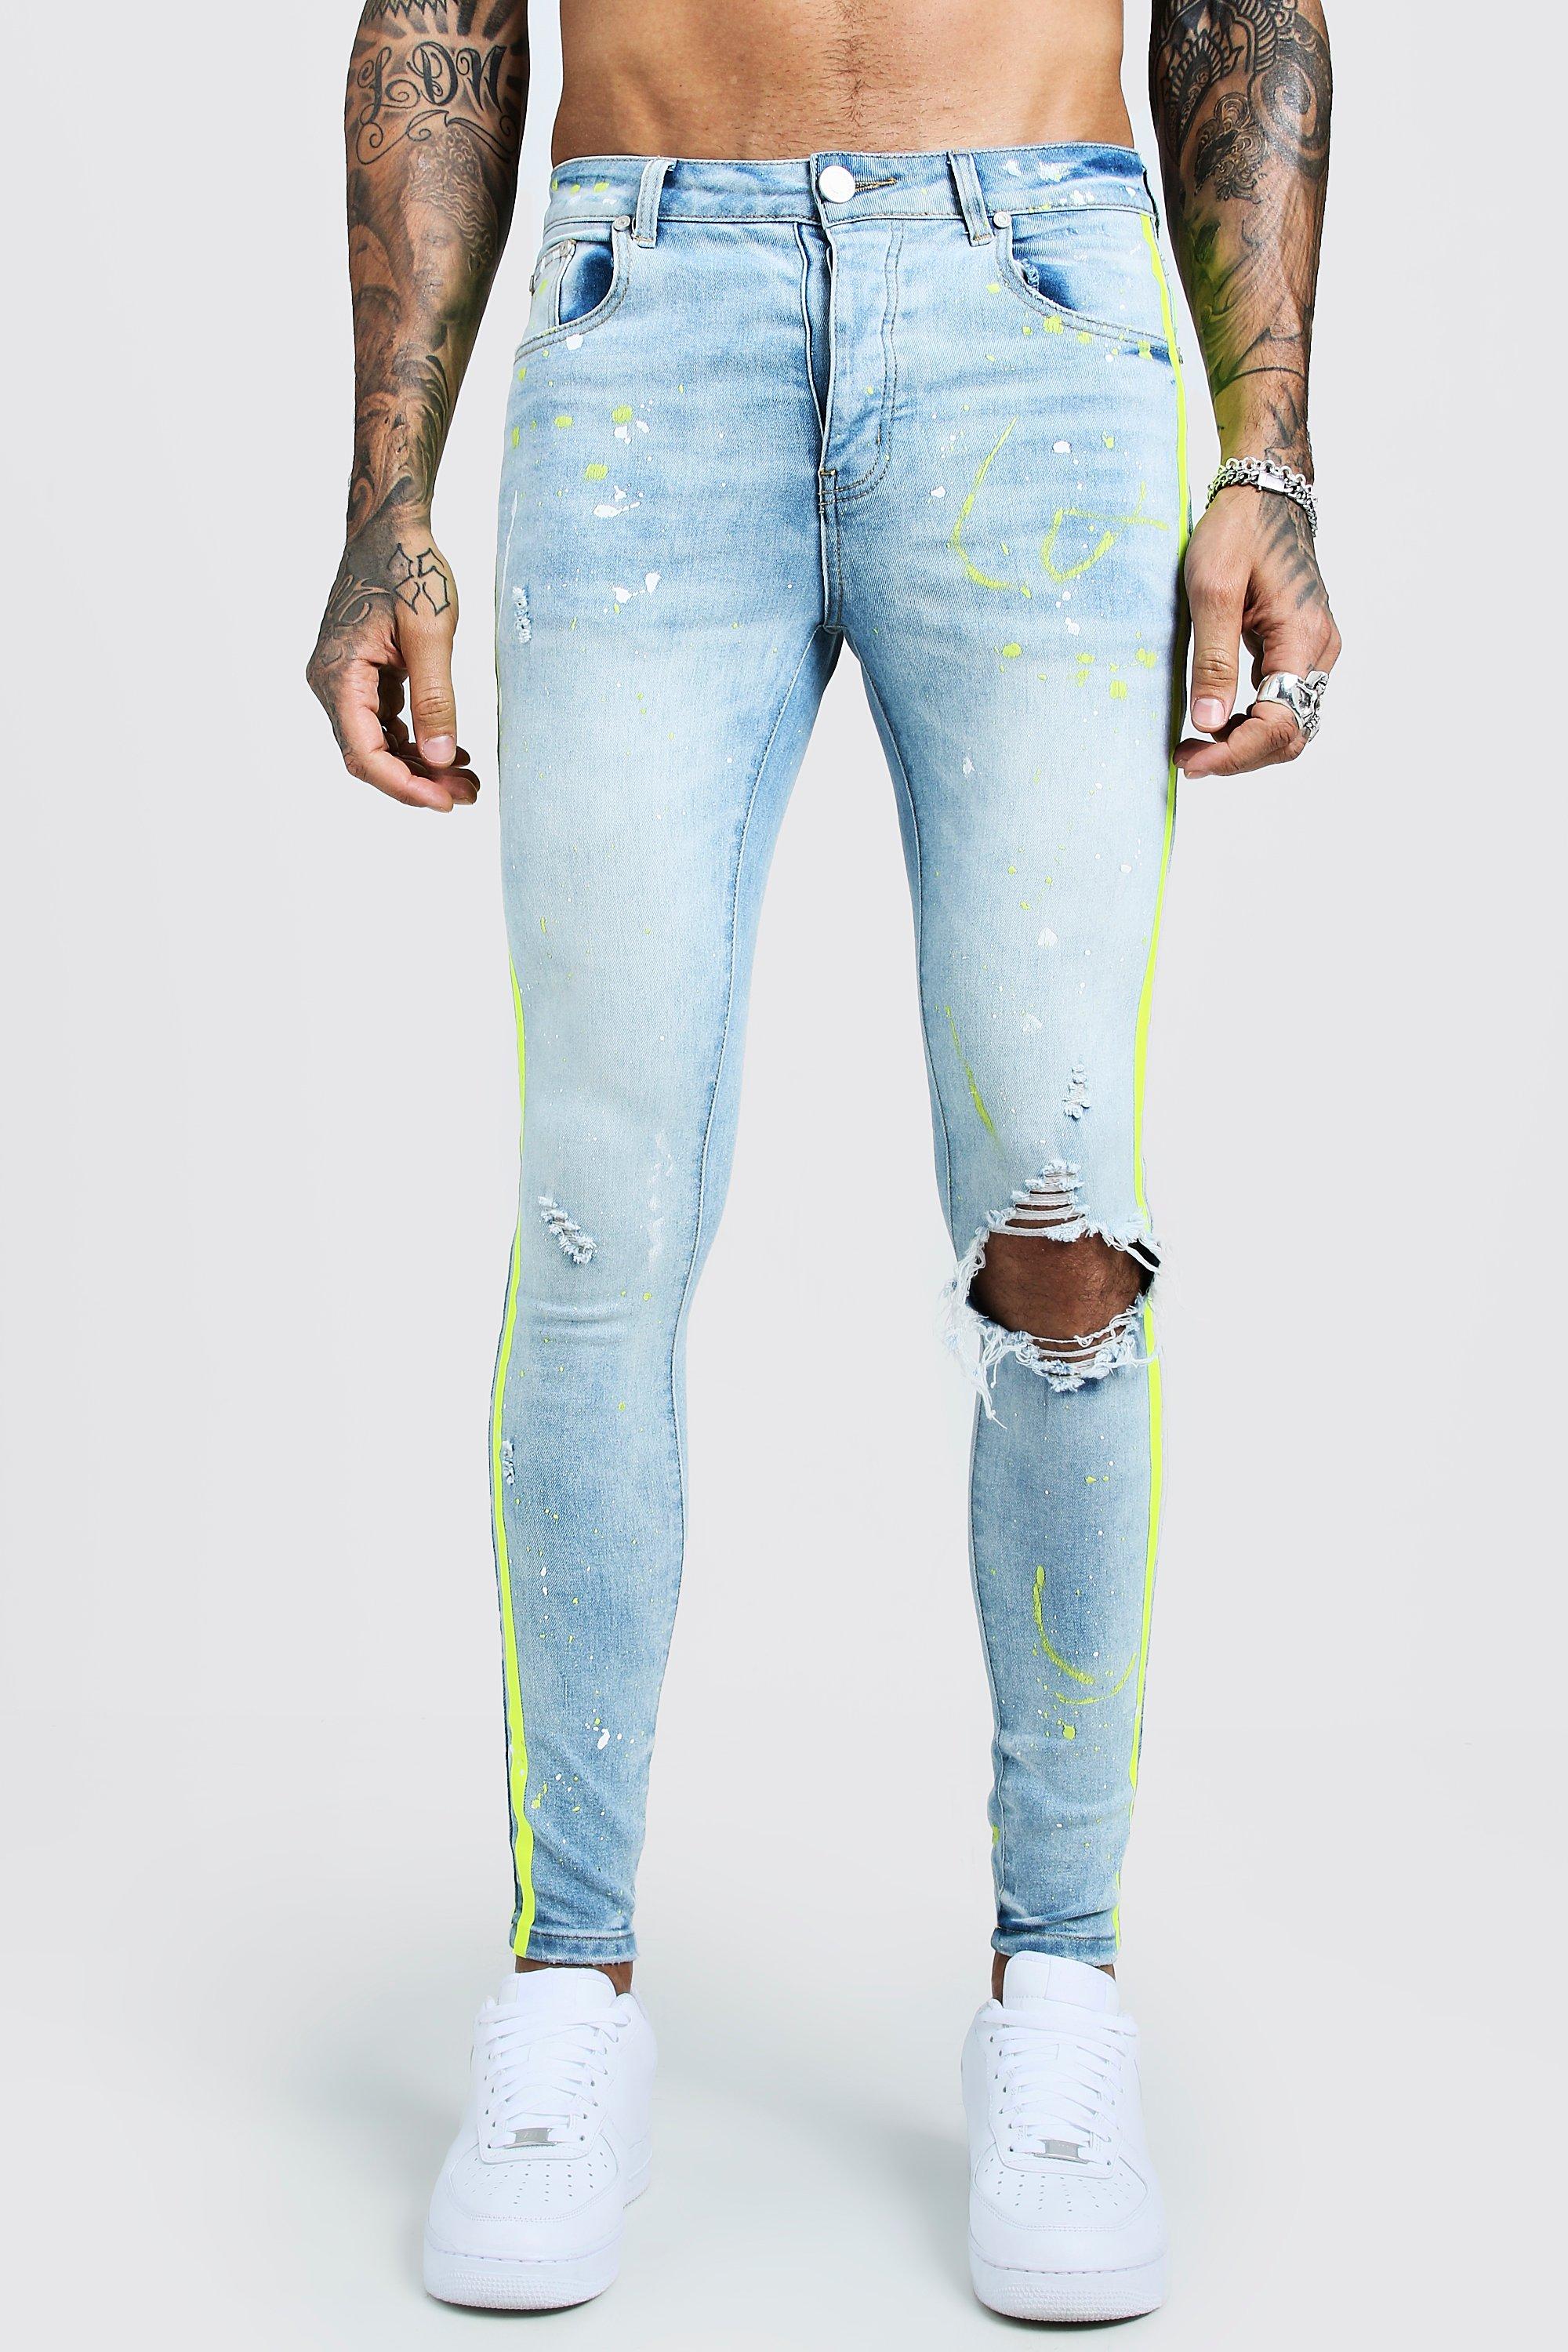 green slim fit jeans mens